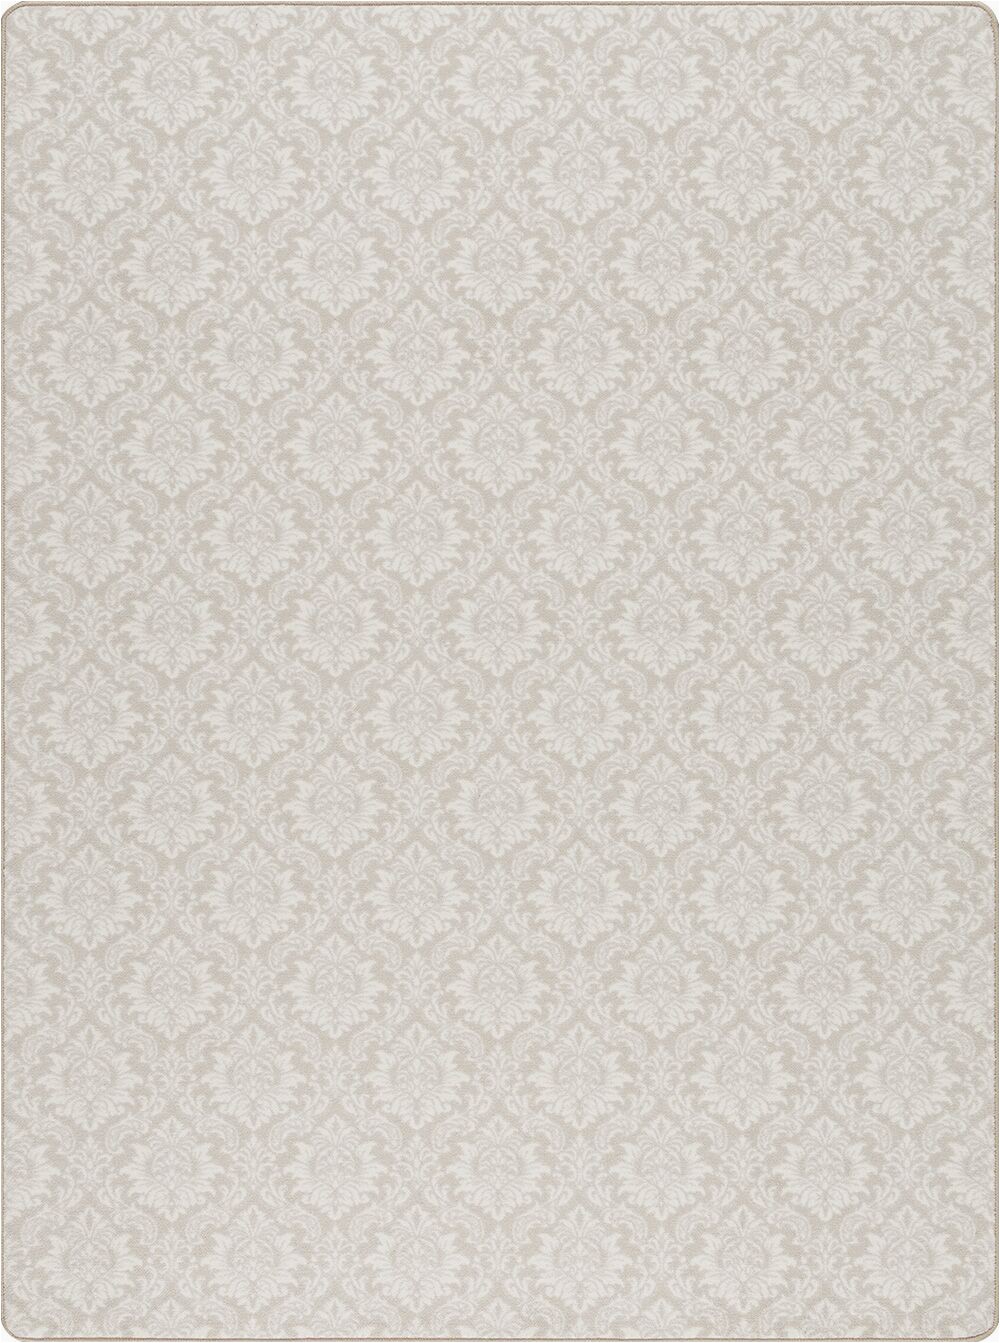 tinsman cream area rug rug size rectangle 78 x 109 b54b4b